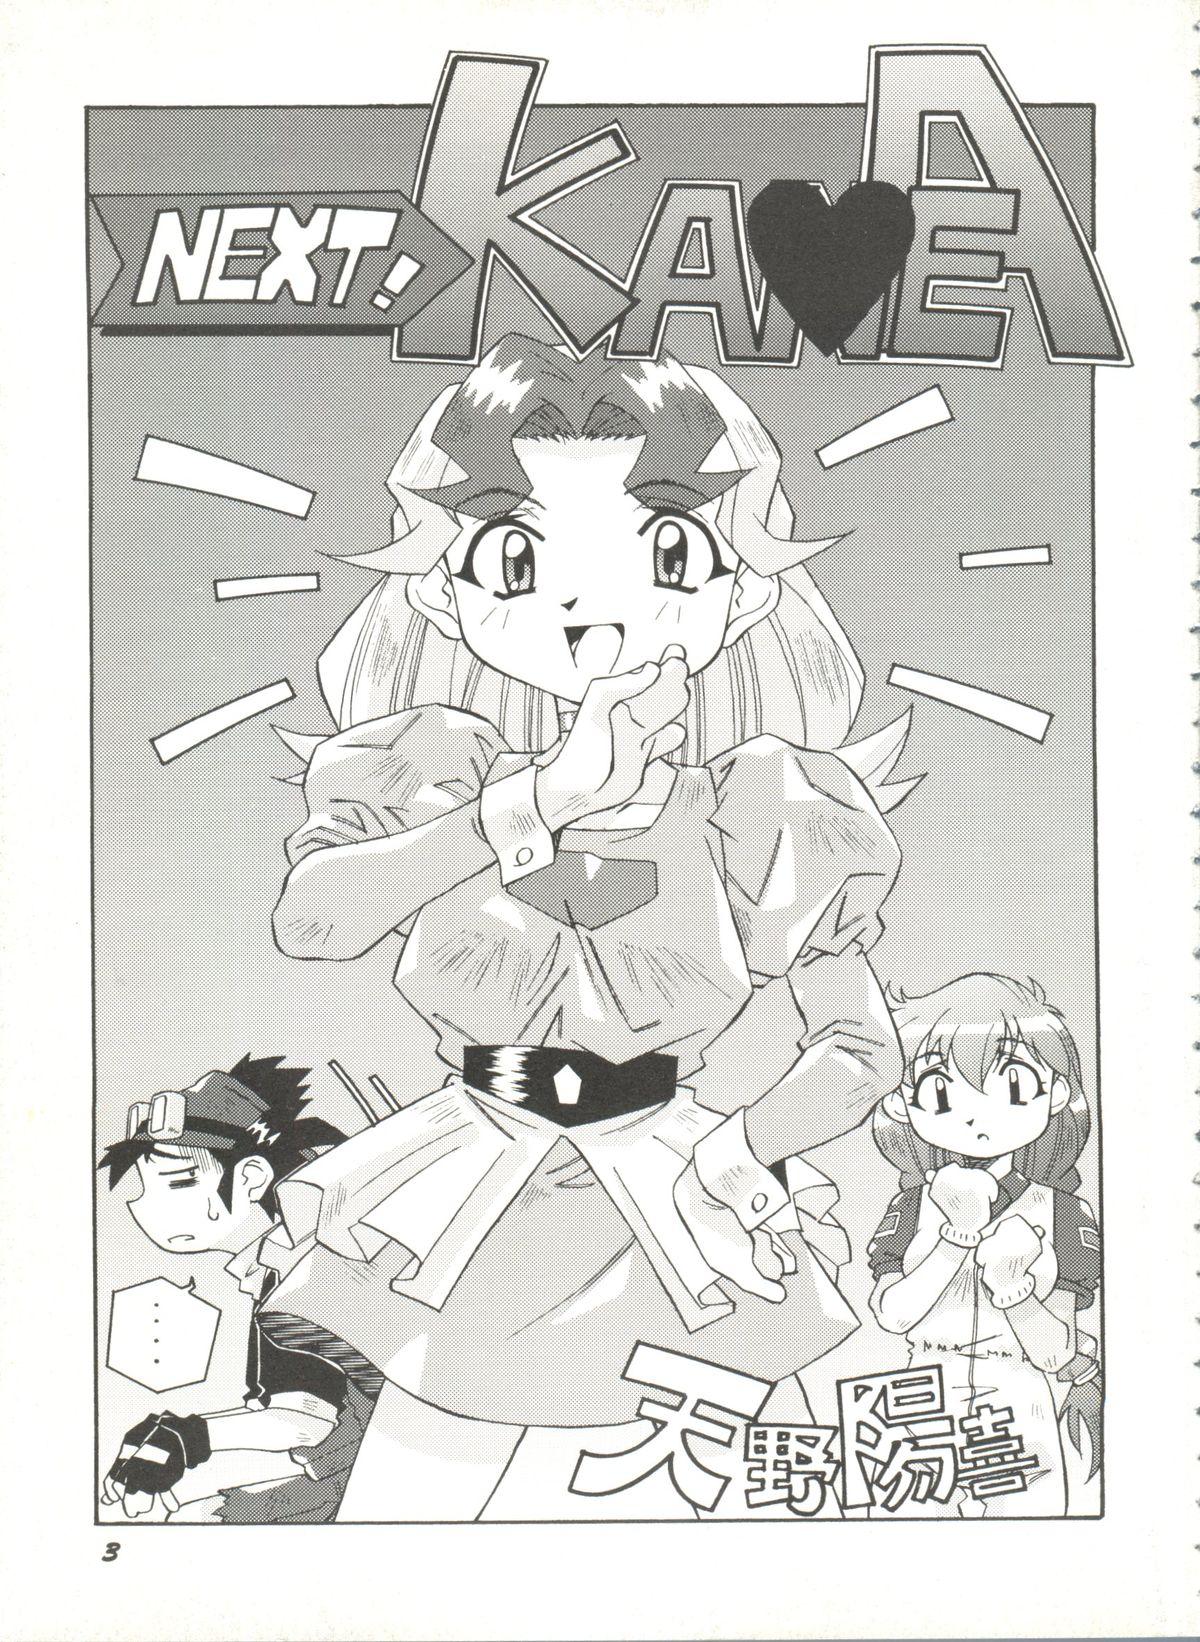 Spy Aniparo Miki 12 - Neon genesis evangelion Sailor moon Magic knight rayearth Revolutionary girl utena Yat space travel agency Tattooed - Page 5